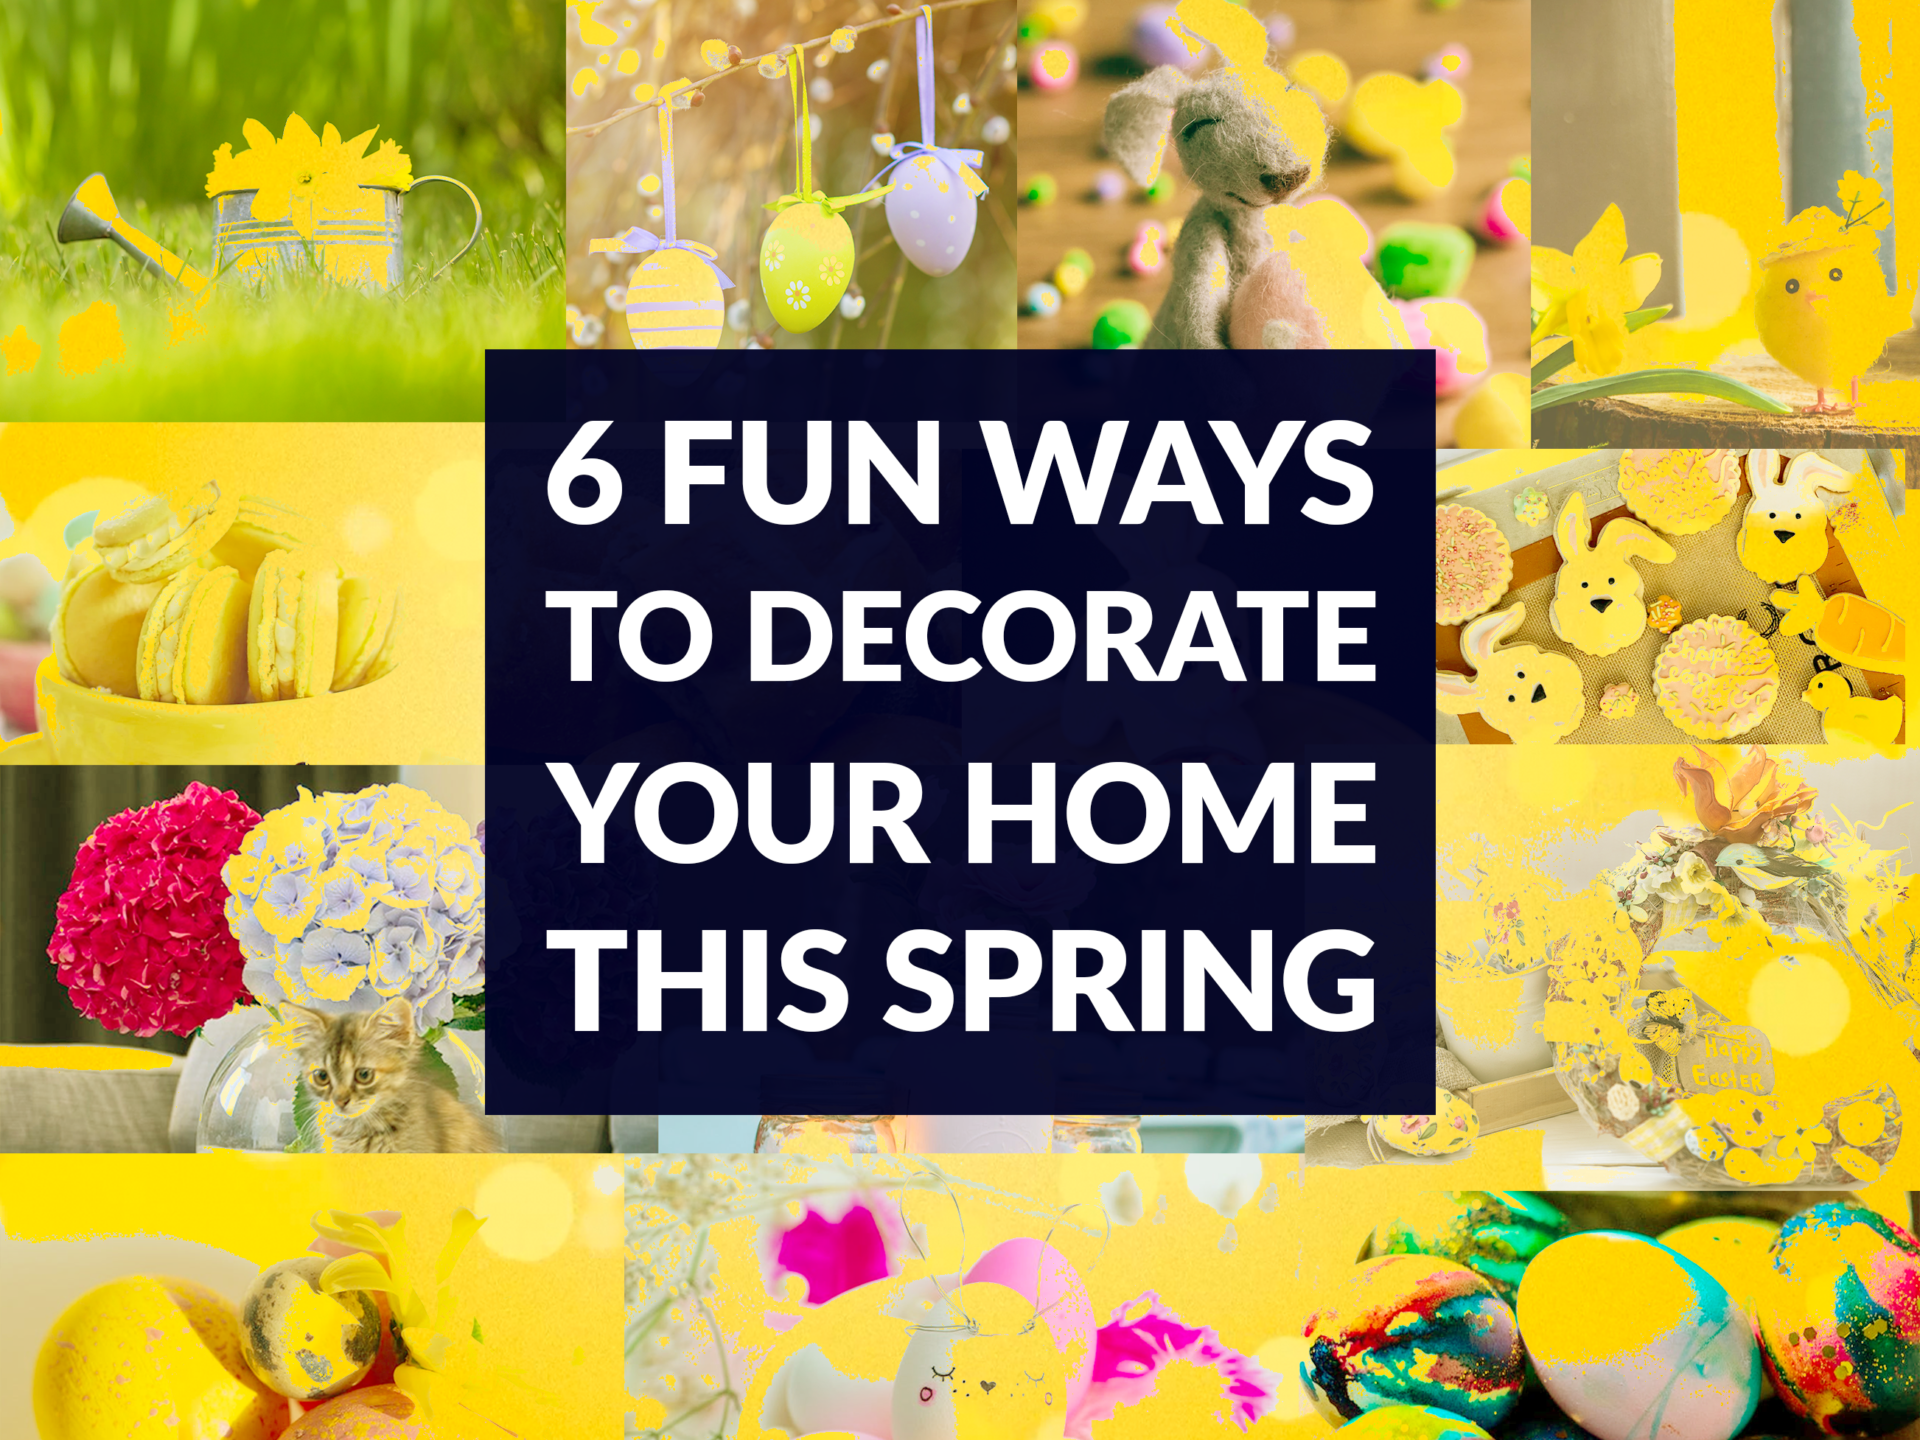 spring decorating home ideas diy craft easter